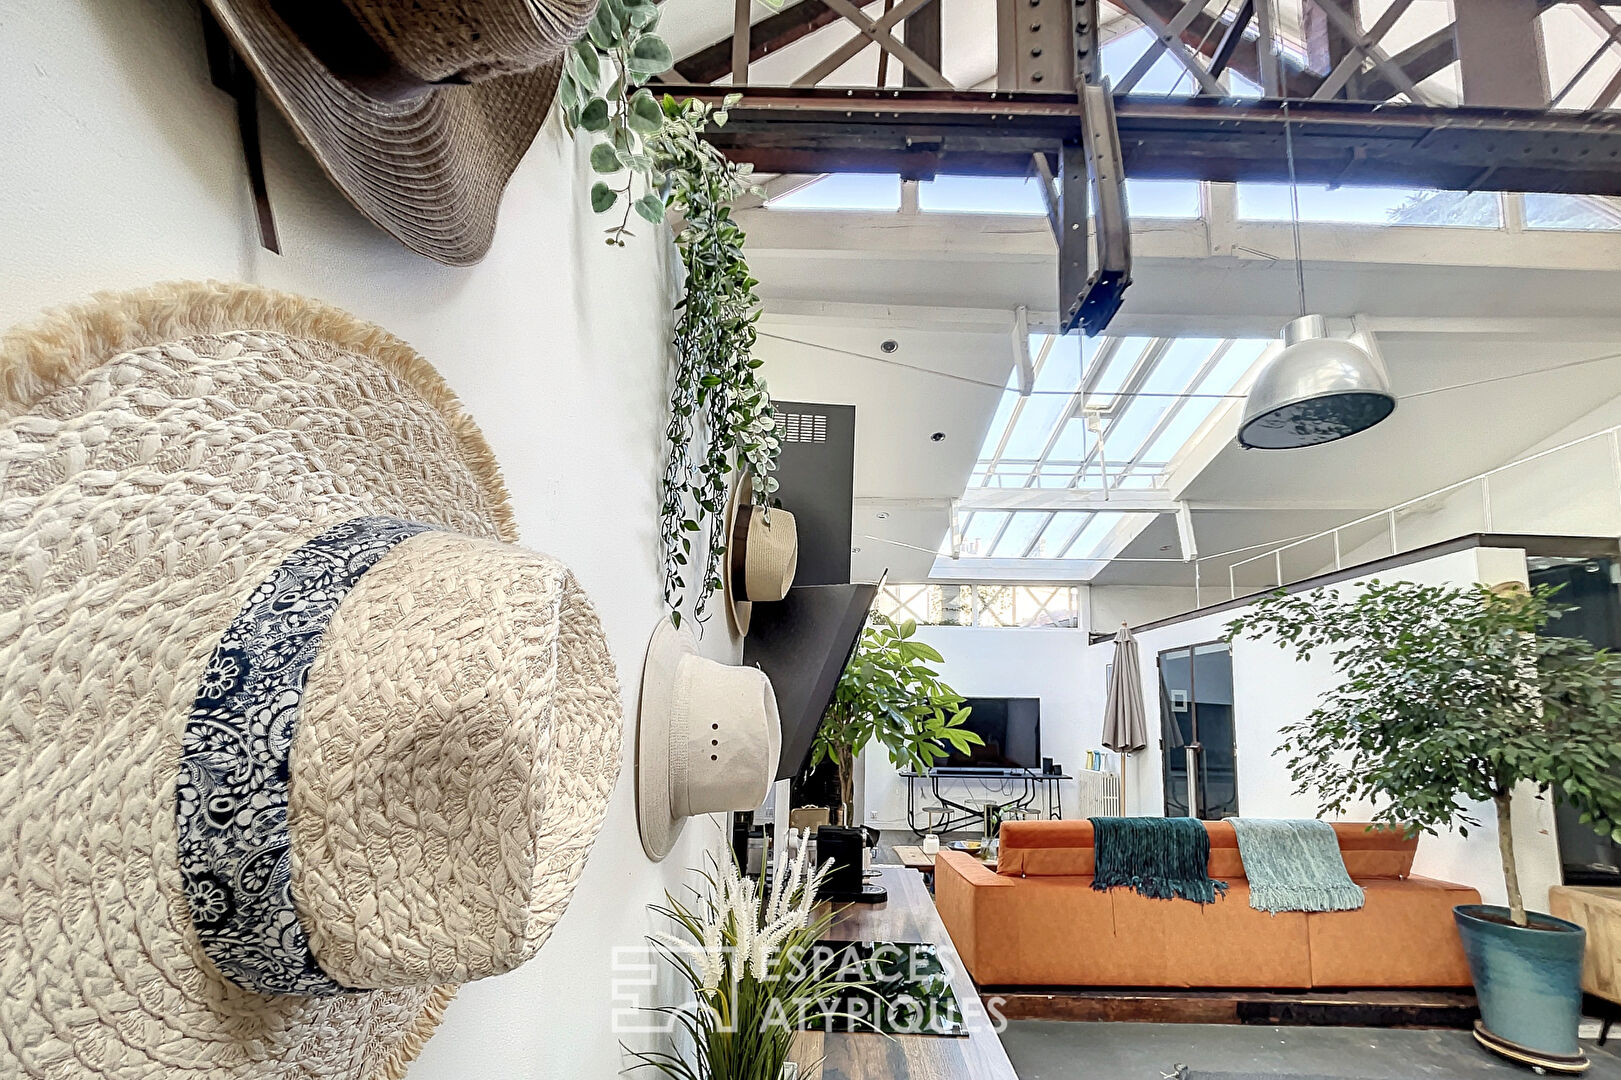 Artist’s studio transformed into a furnished Loft